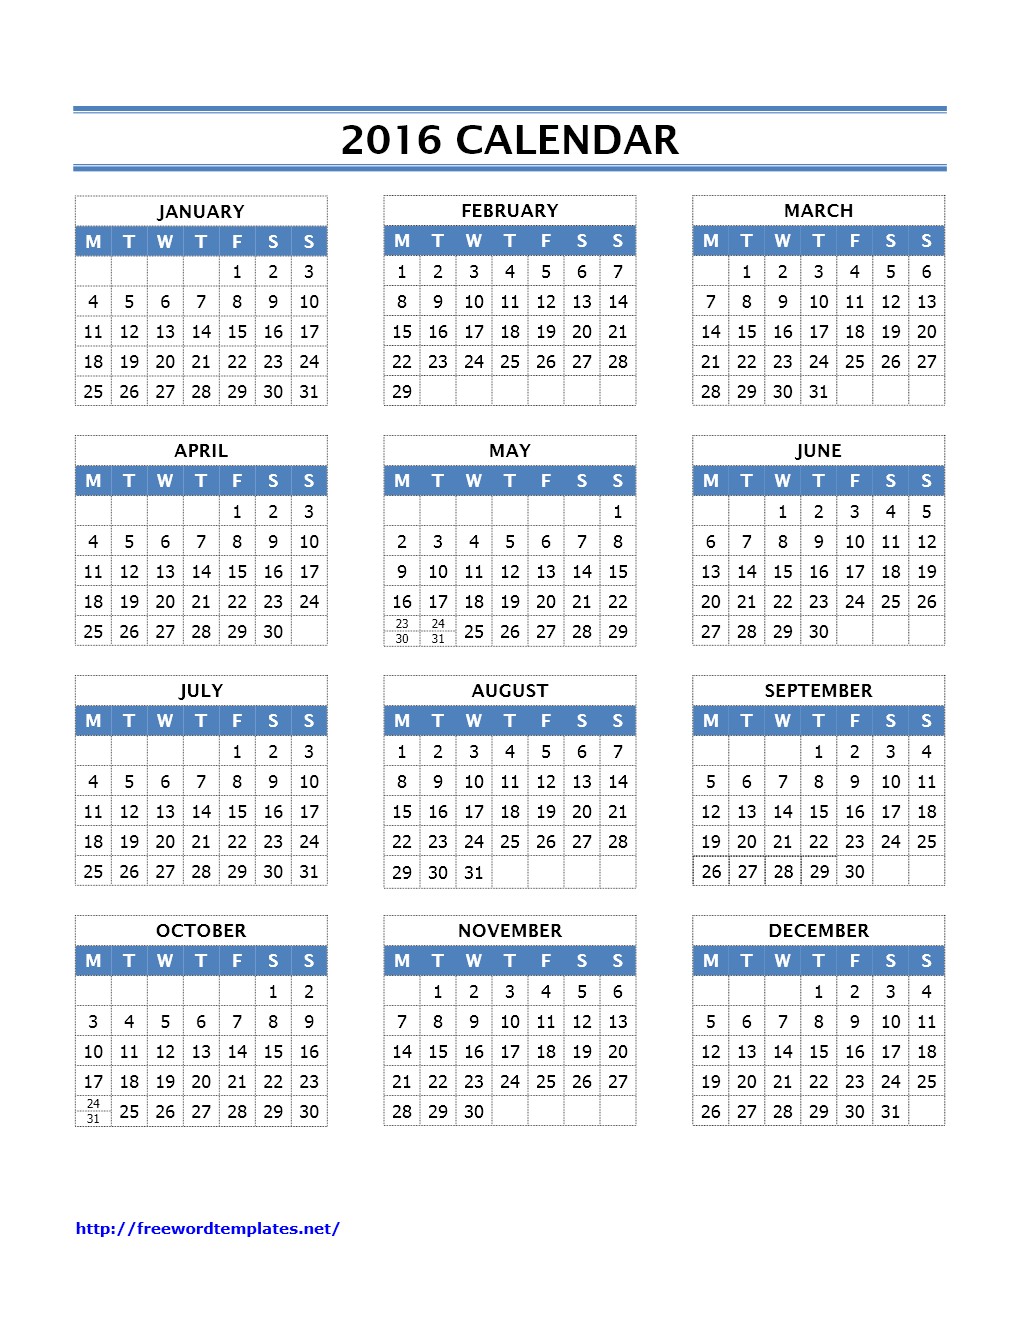 2016 Calendar Templates Free